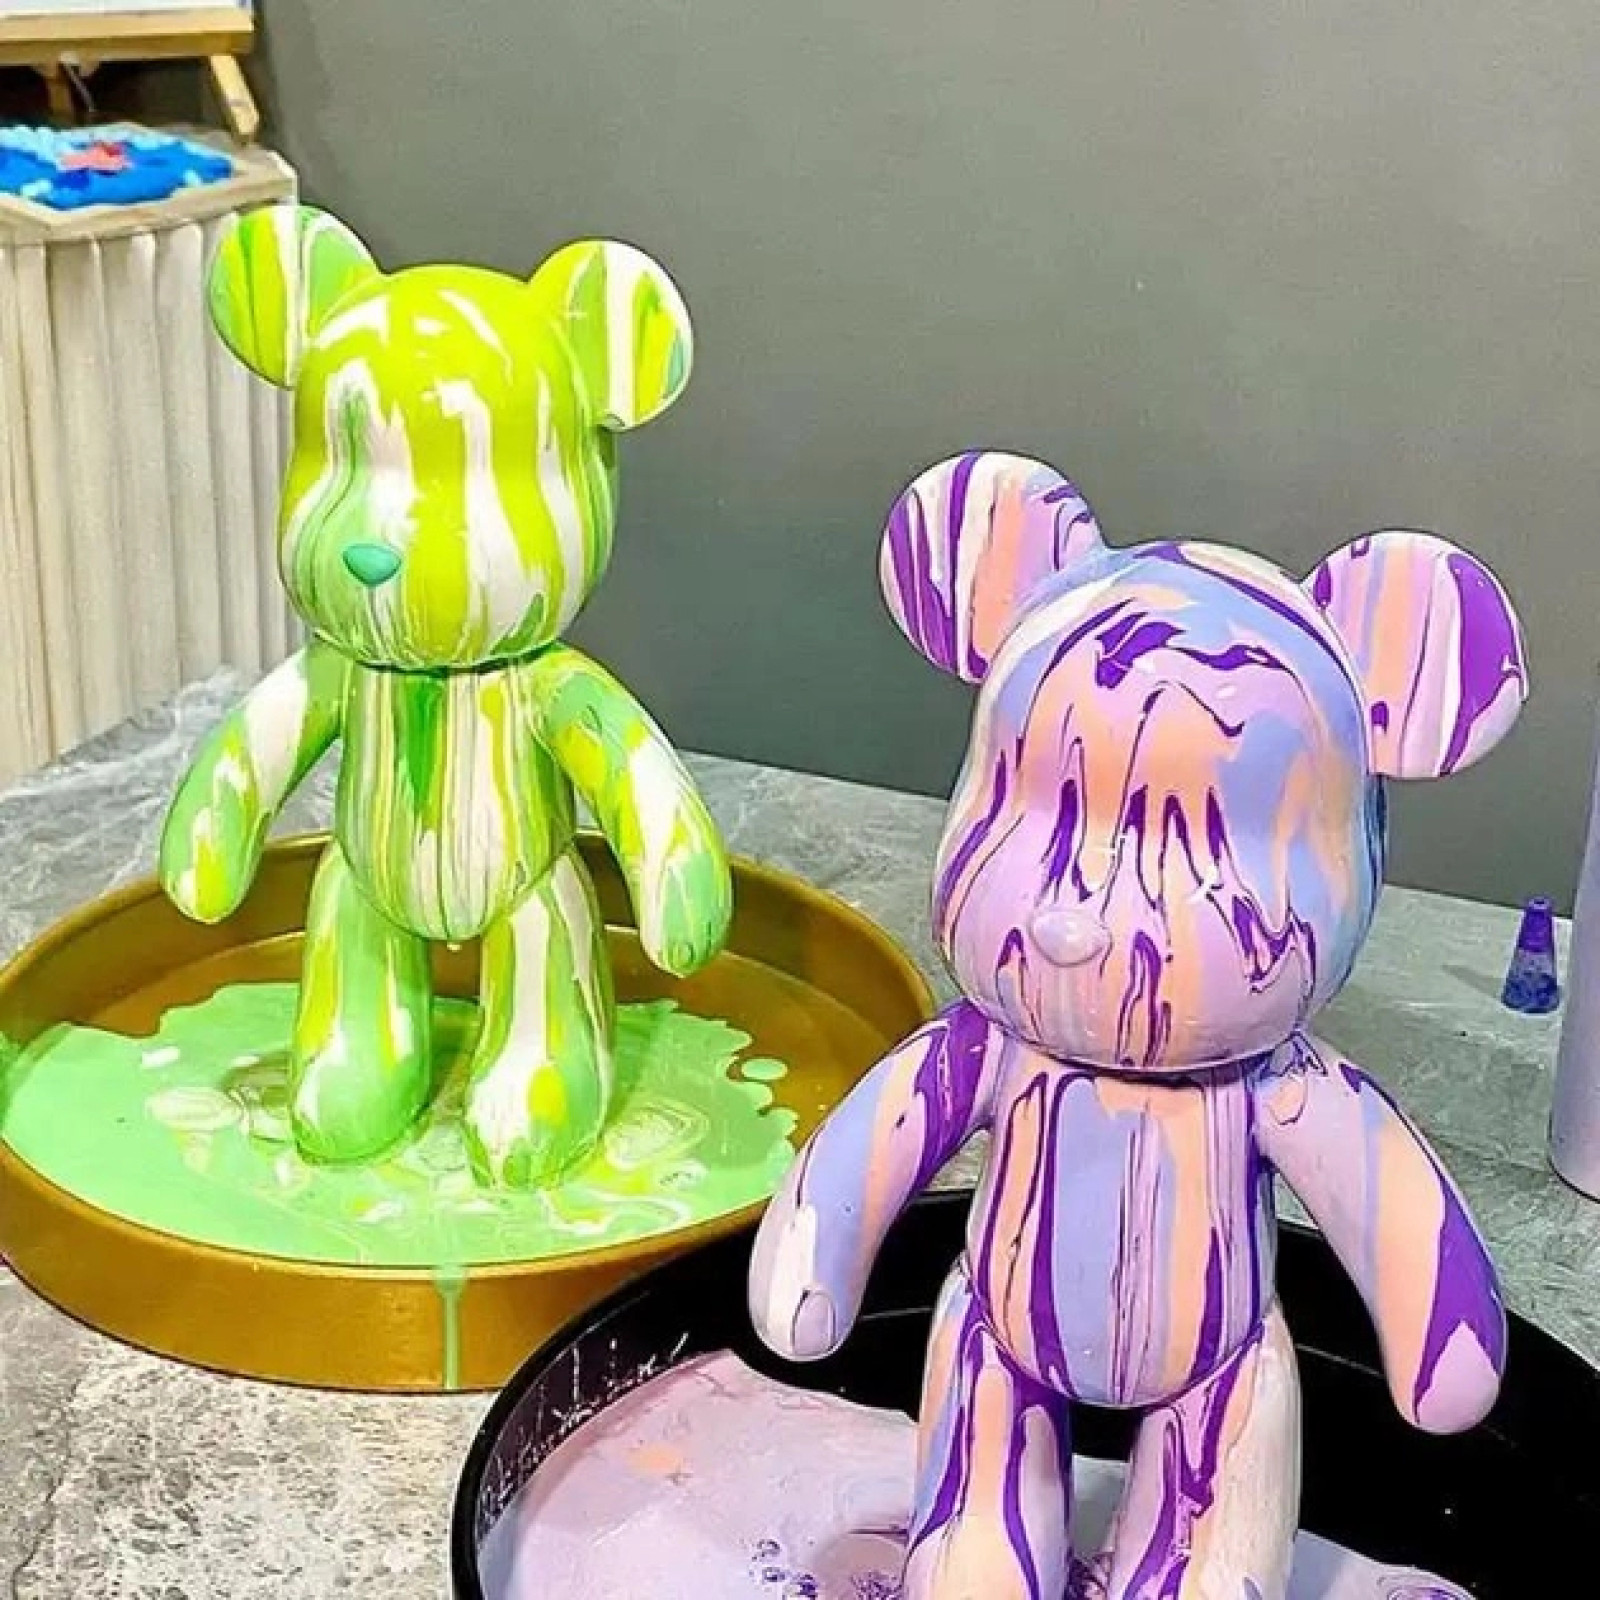 Punk Fluid Bear Bearbrick с красками, набор для творчества сделай сам DIY 33 см